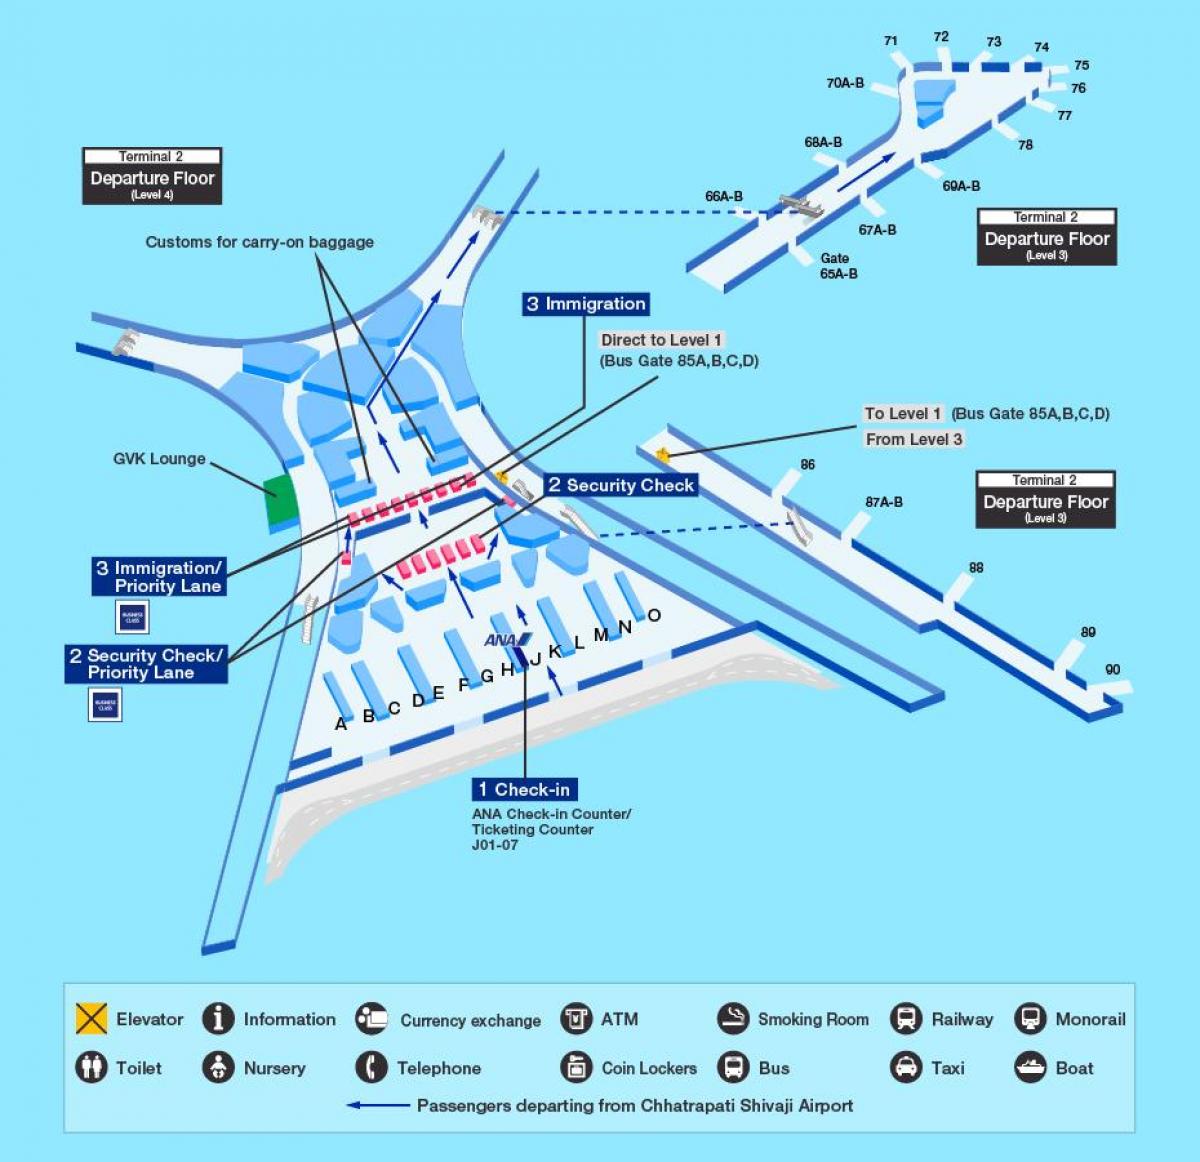 Mumbai International airport terminal 2 Schemat